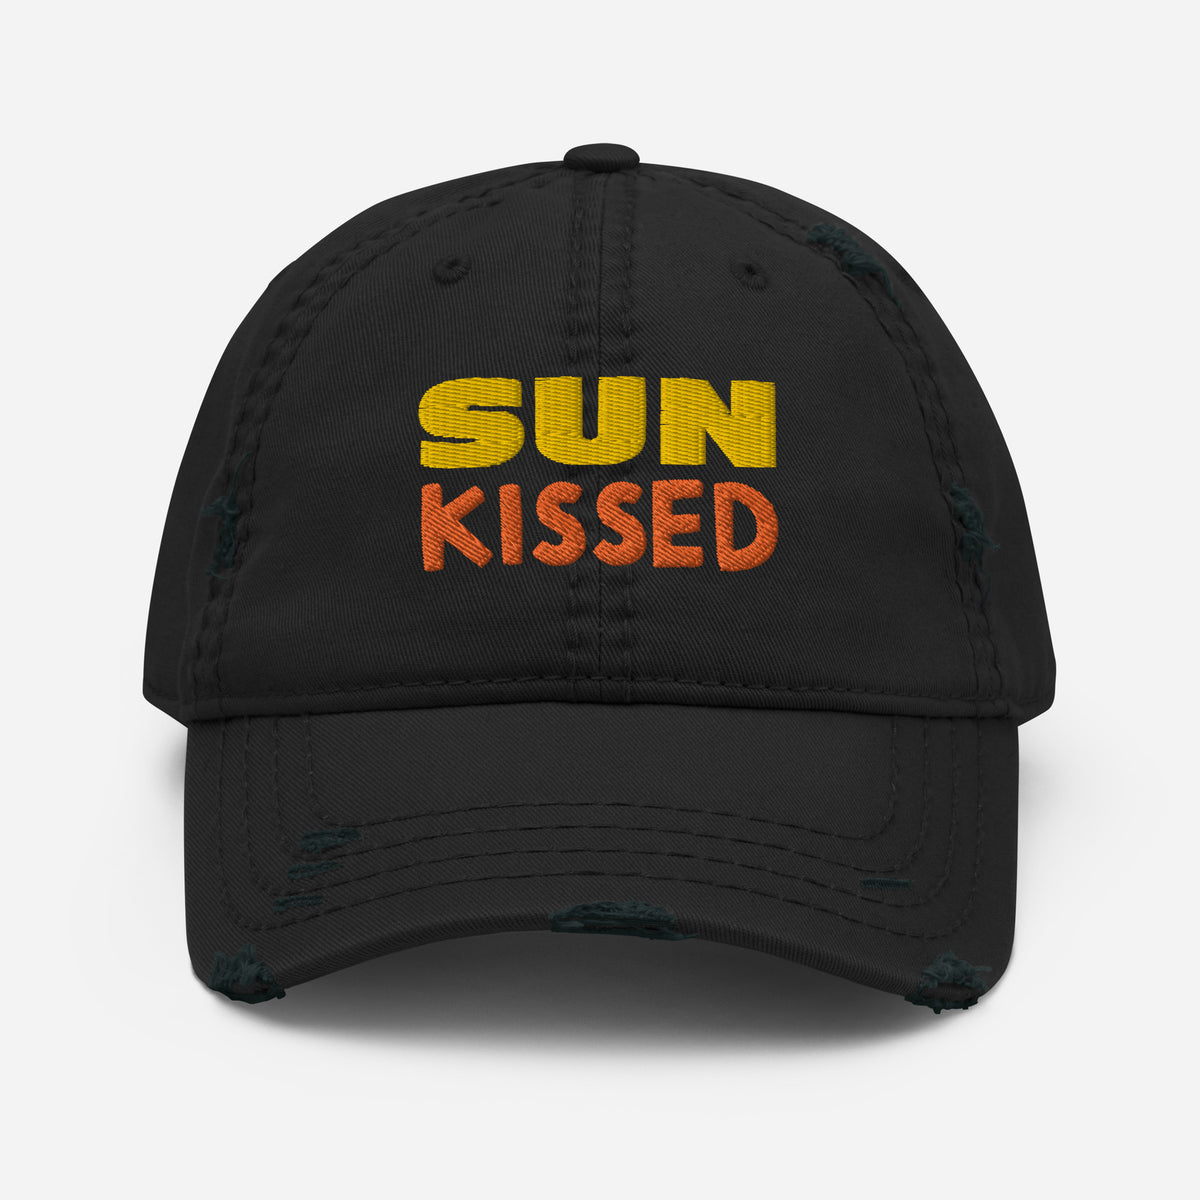 Sun Kissed Distressed Dad Hat